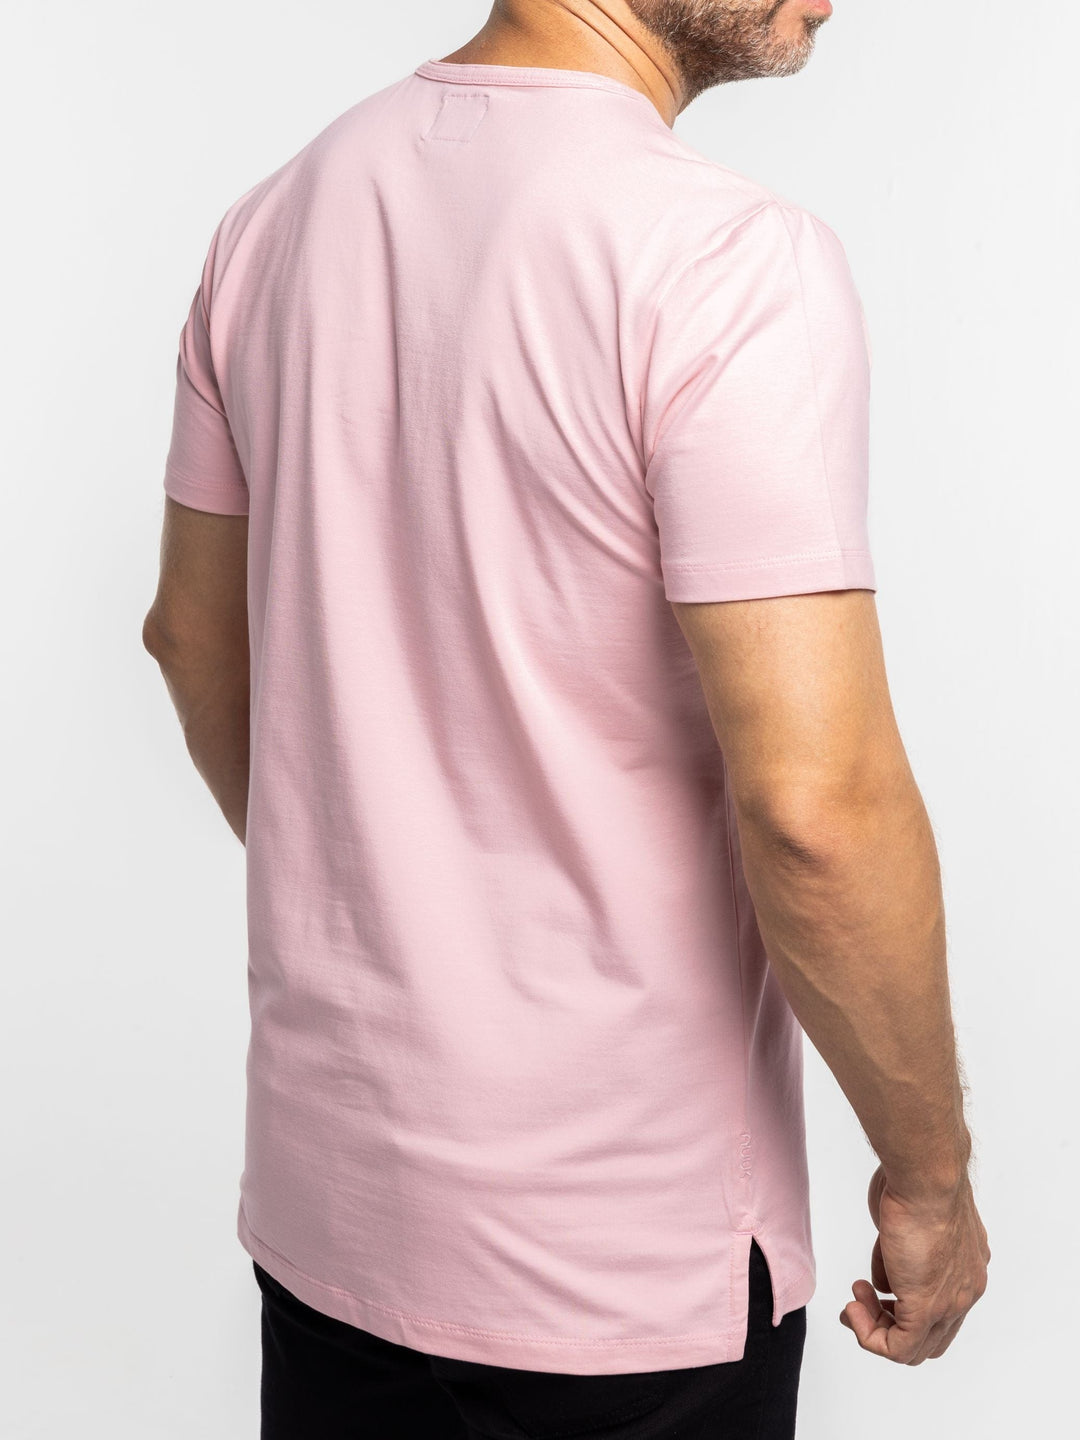 Zhivago x Nuuk Men T-shirt Light Rose Split Hem T-Shirt: SLS Comfort